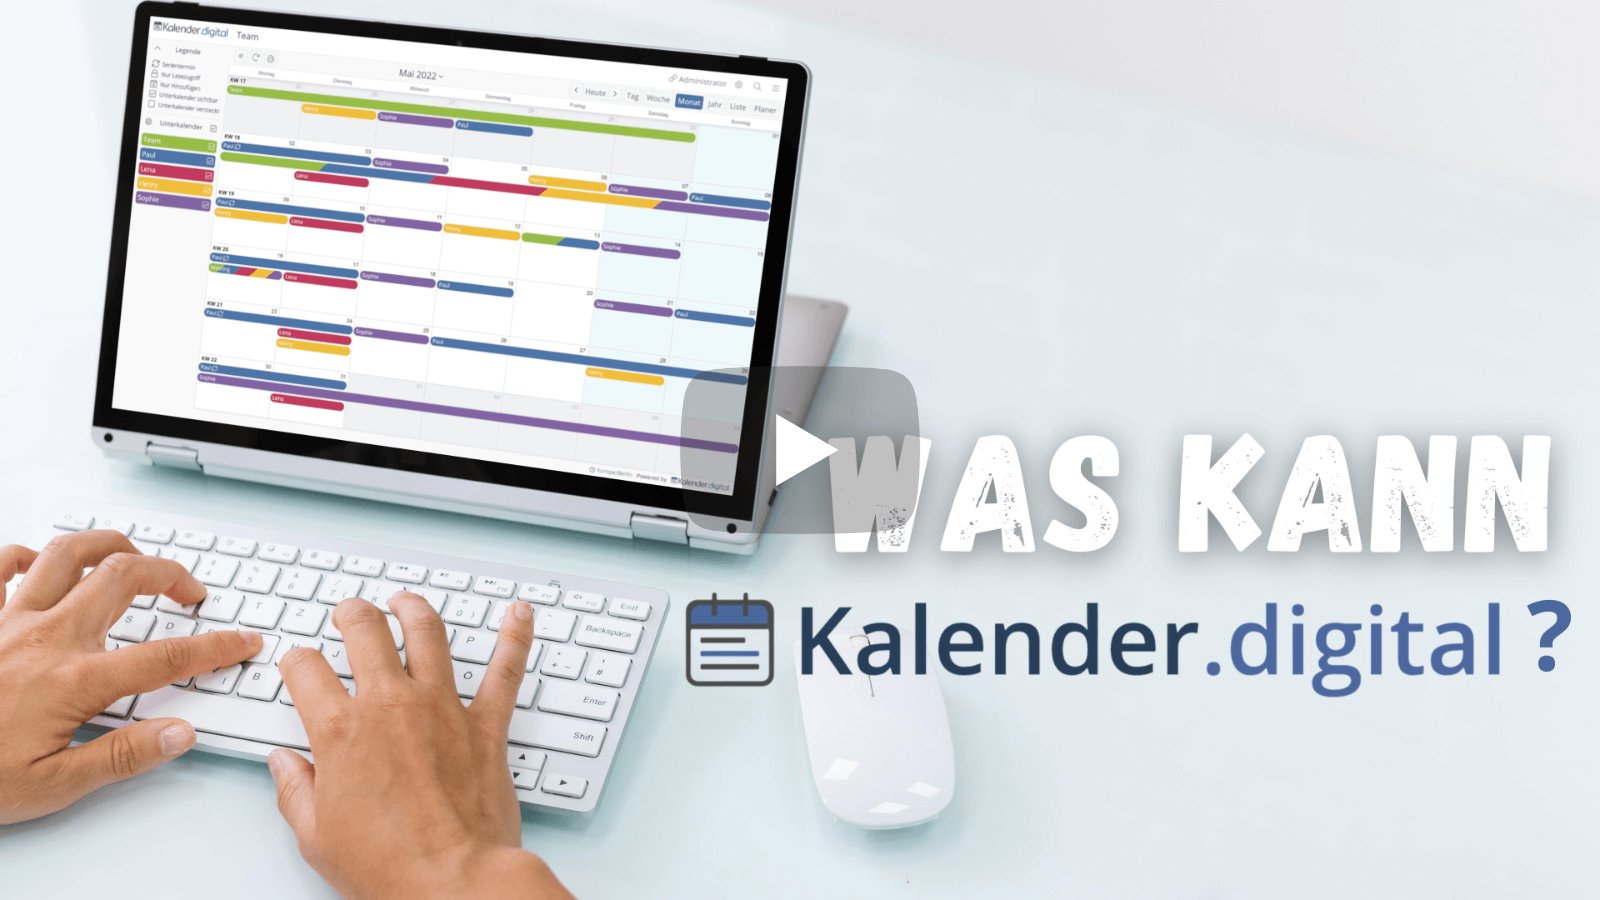 Video: Was kann Kalender.digital?